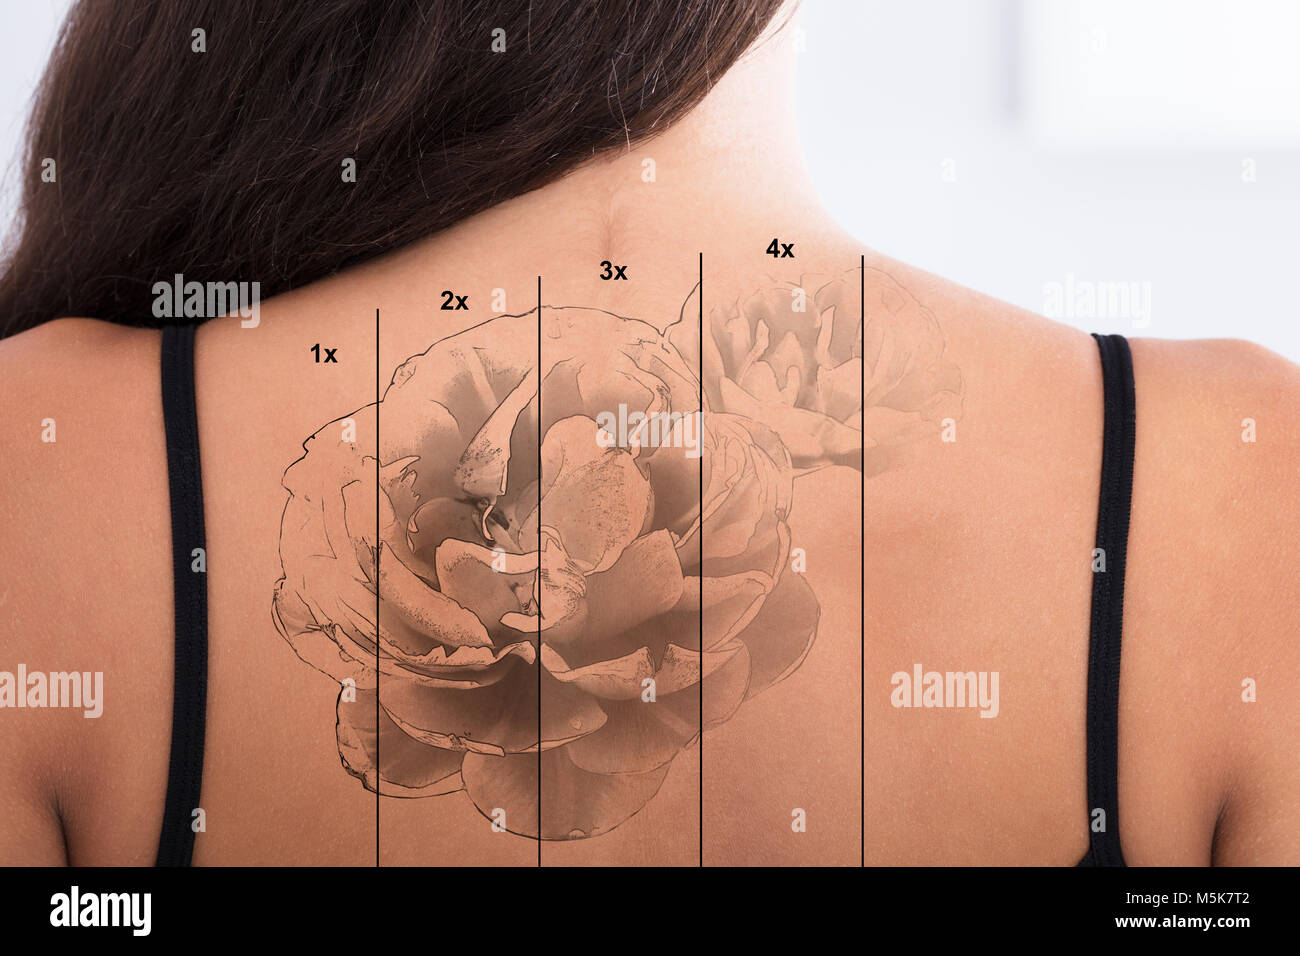 Cosmetic Dermatology I Laser Tattoo Removal I Hair Removal  San Antonio  Dermatology